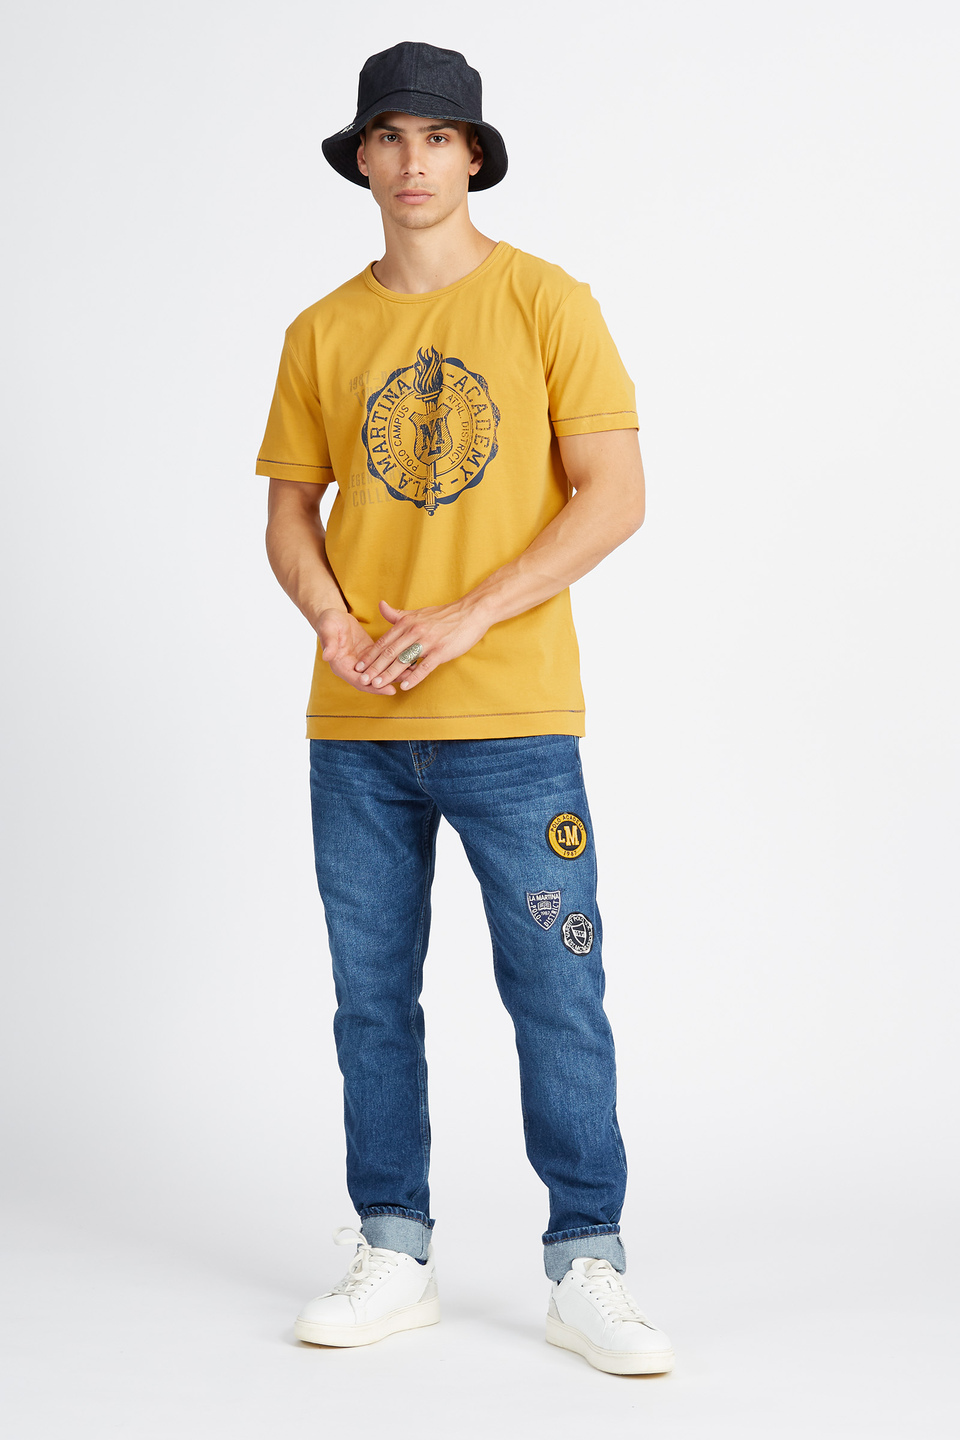 Pantalone jeans denim uomo 5 tasche e multi logo Polo Academy - Viggo | La Martina - Official Online Shop